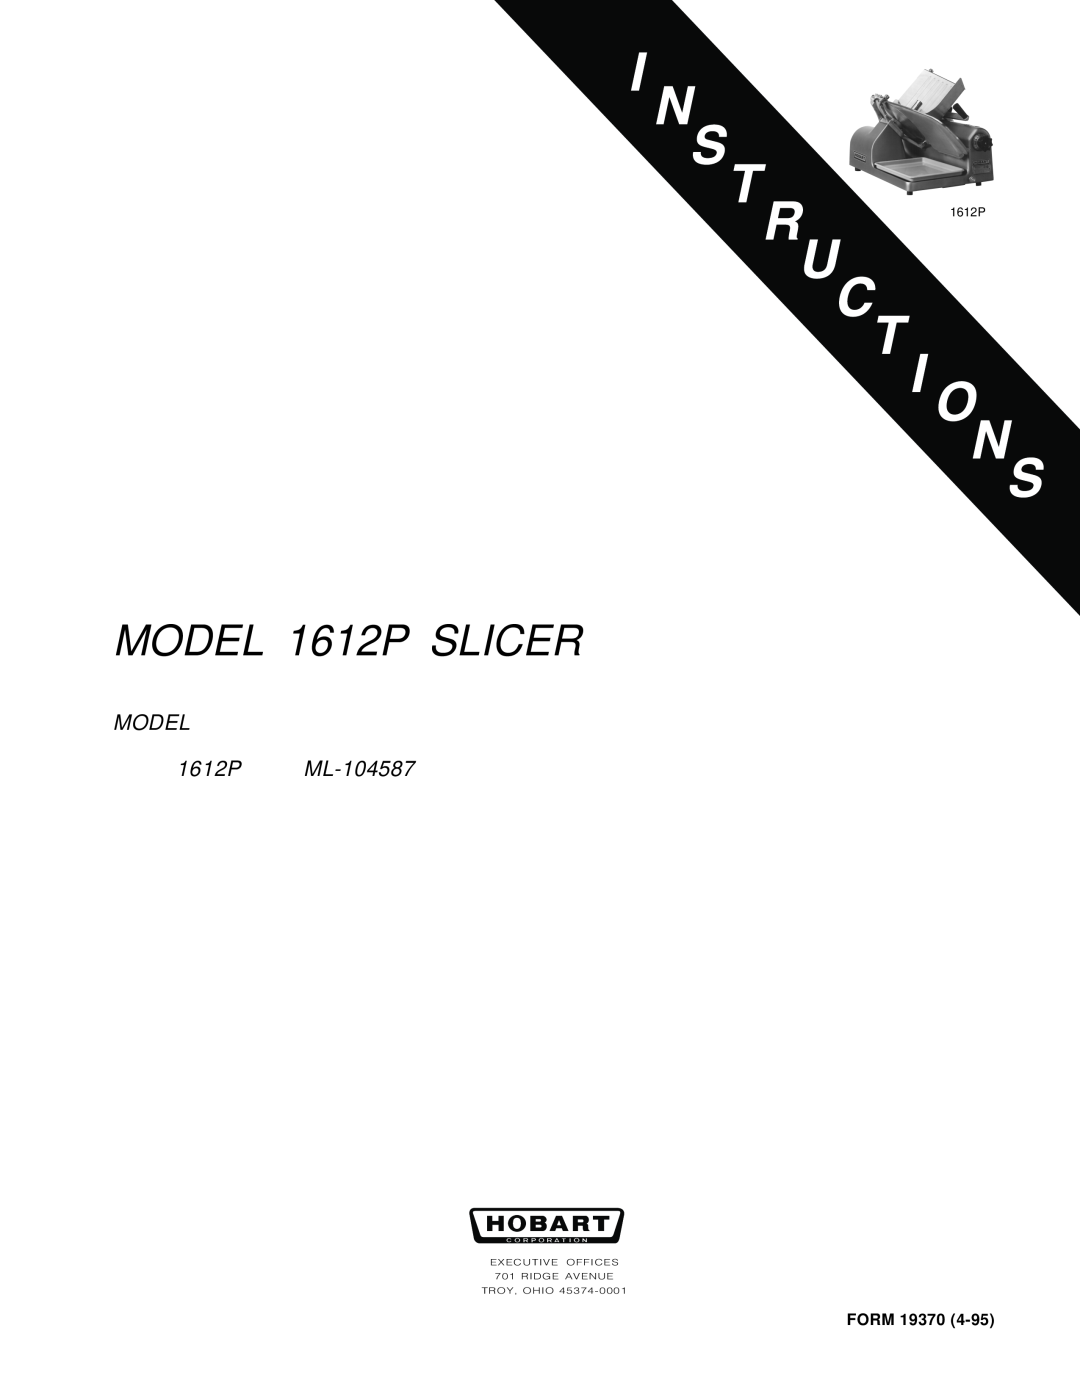 Hobart manual MODEL 1612P SLICER, MODEL 1612P ML-104587, Form, EXECUTIVE OFFICES 701 RIDGE AVENUE TROY, OHIO 